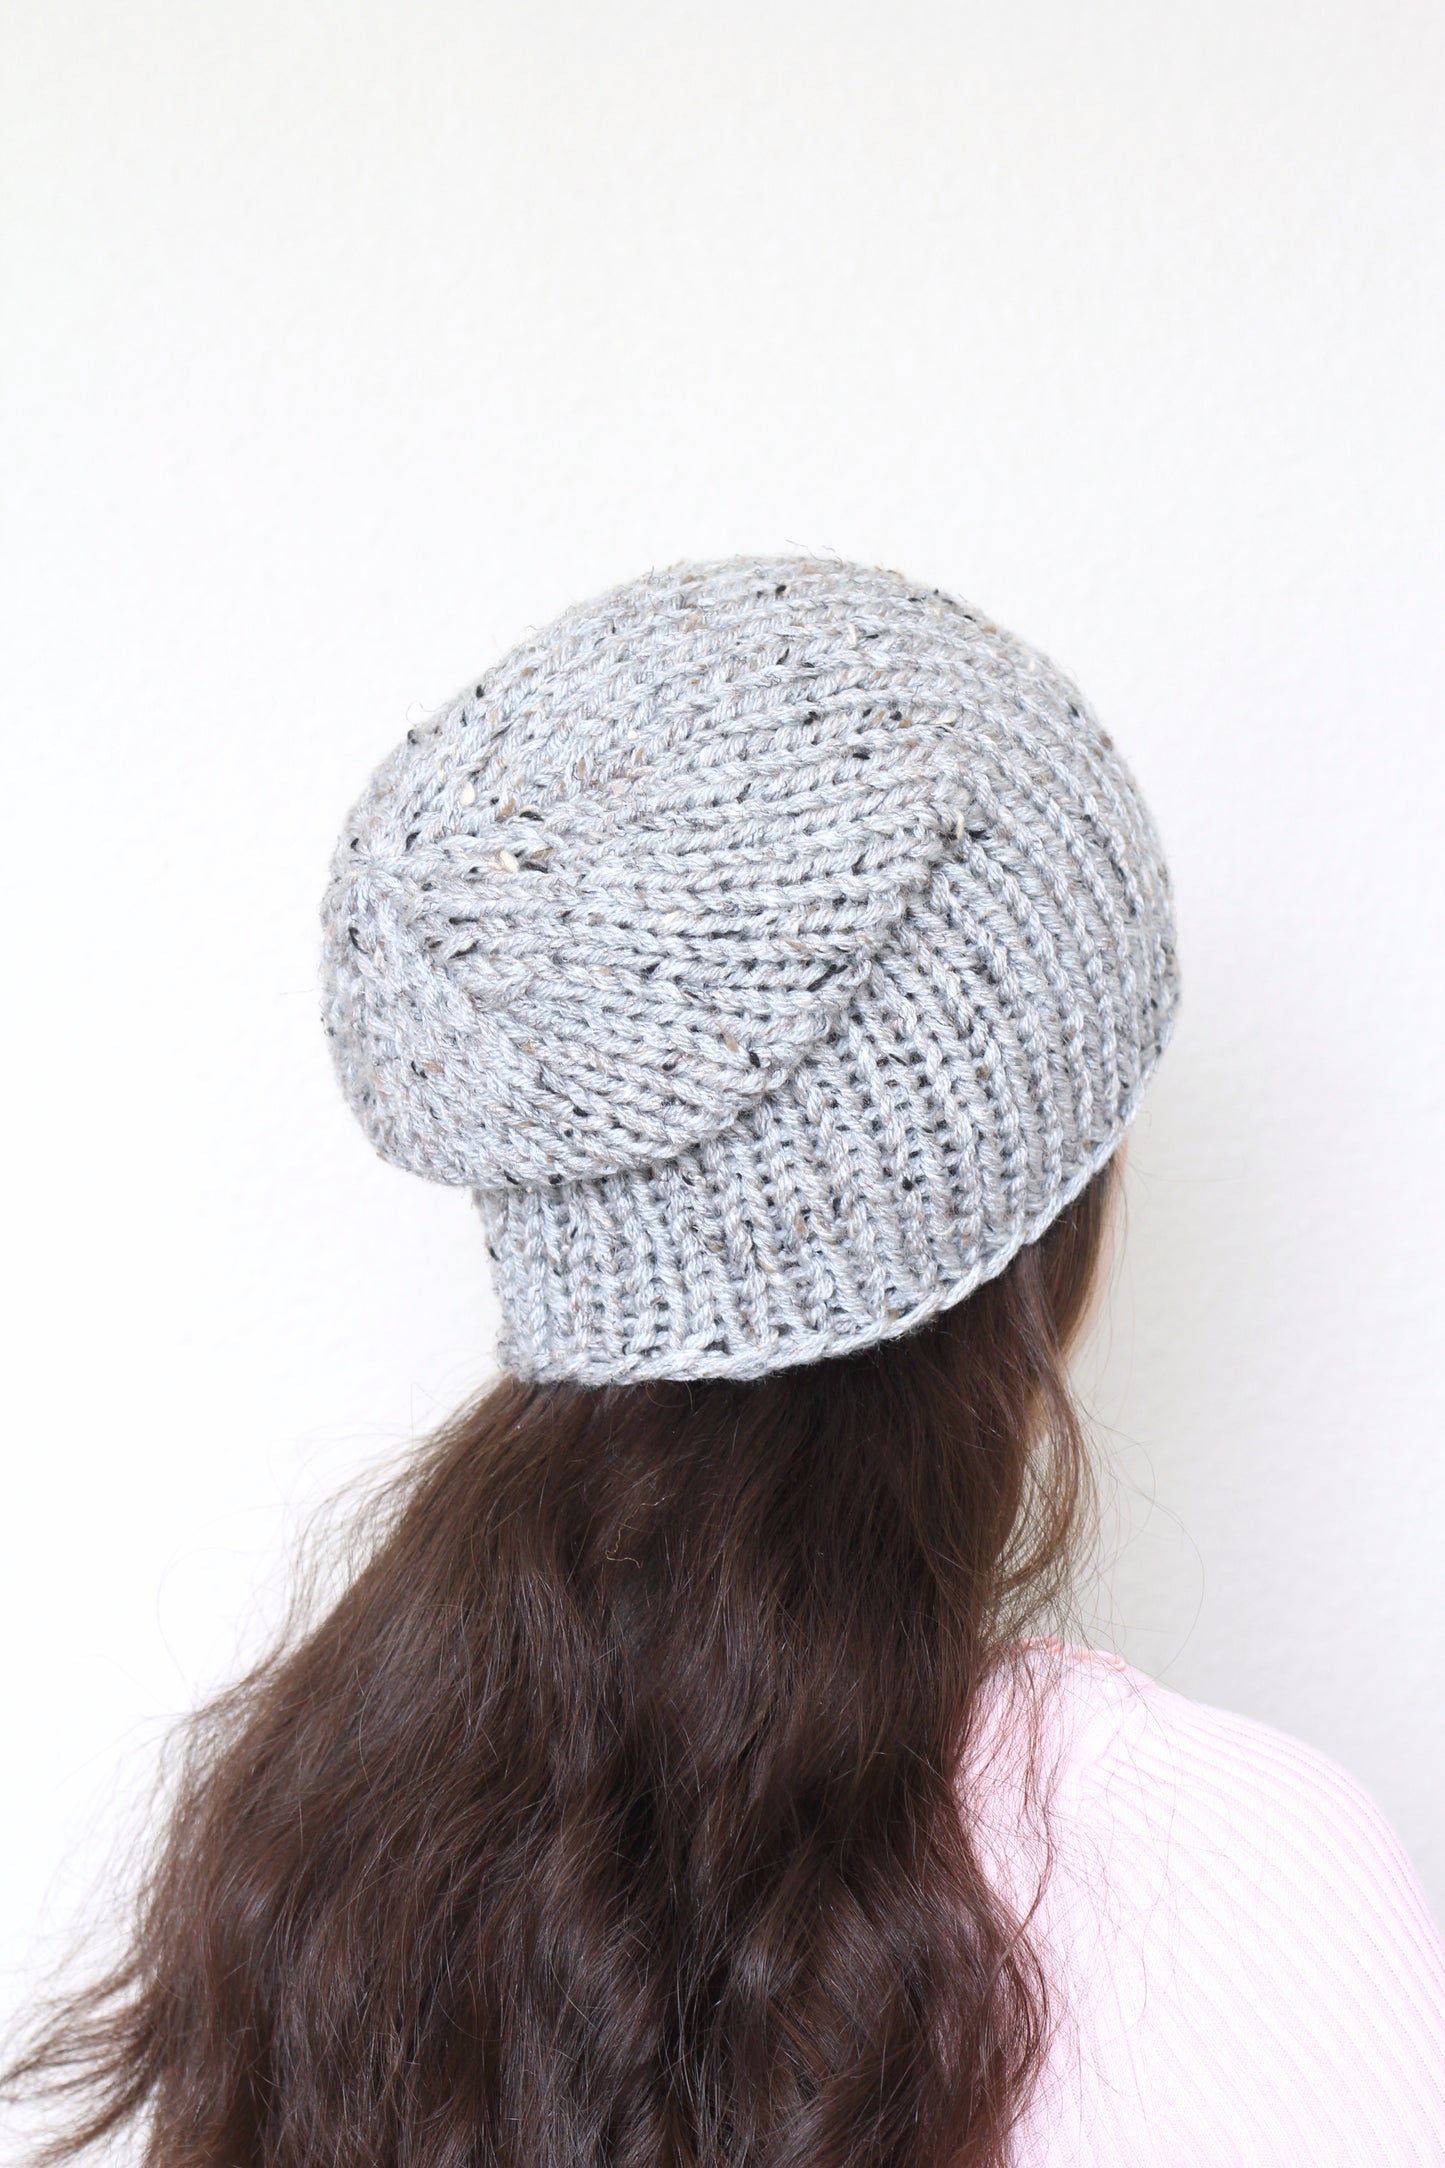 Beanie hat, knit hat, slouchy hat, knit beanie in dark grey color tweed hat